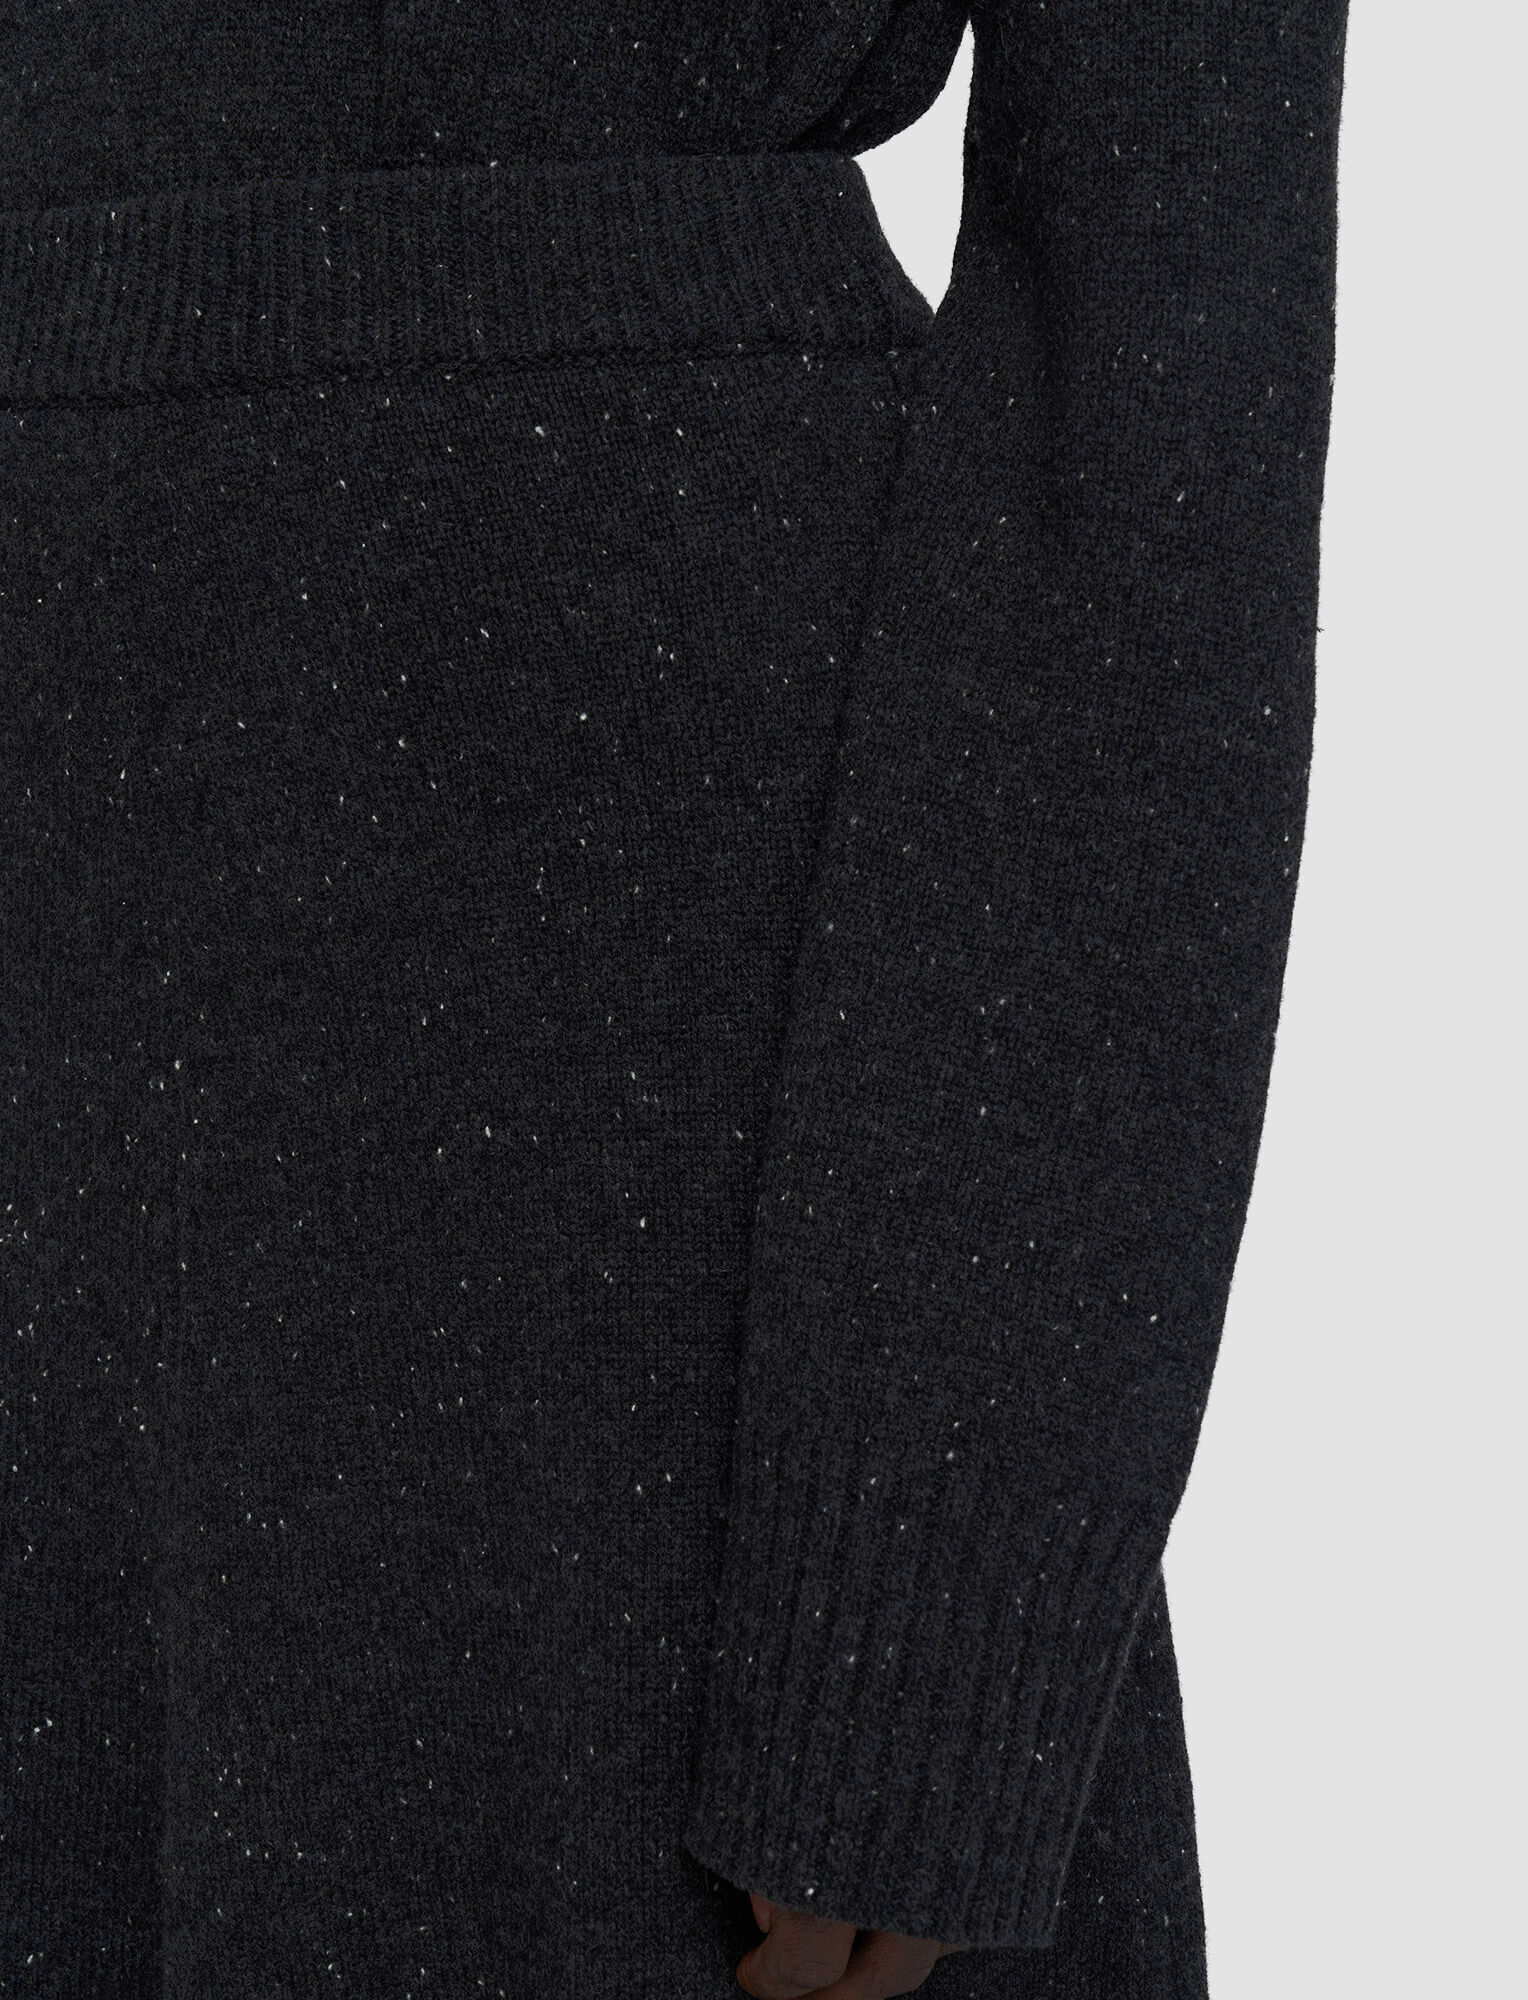 Joseph, Tweed Knit Skirt, in Black